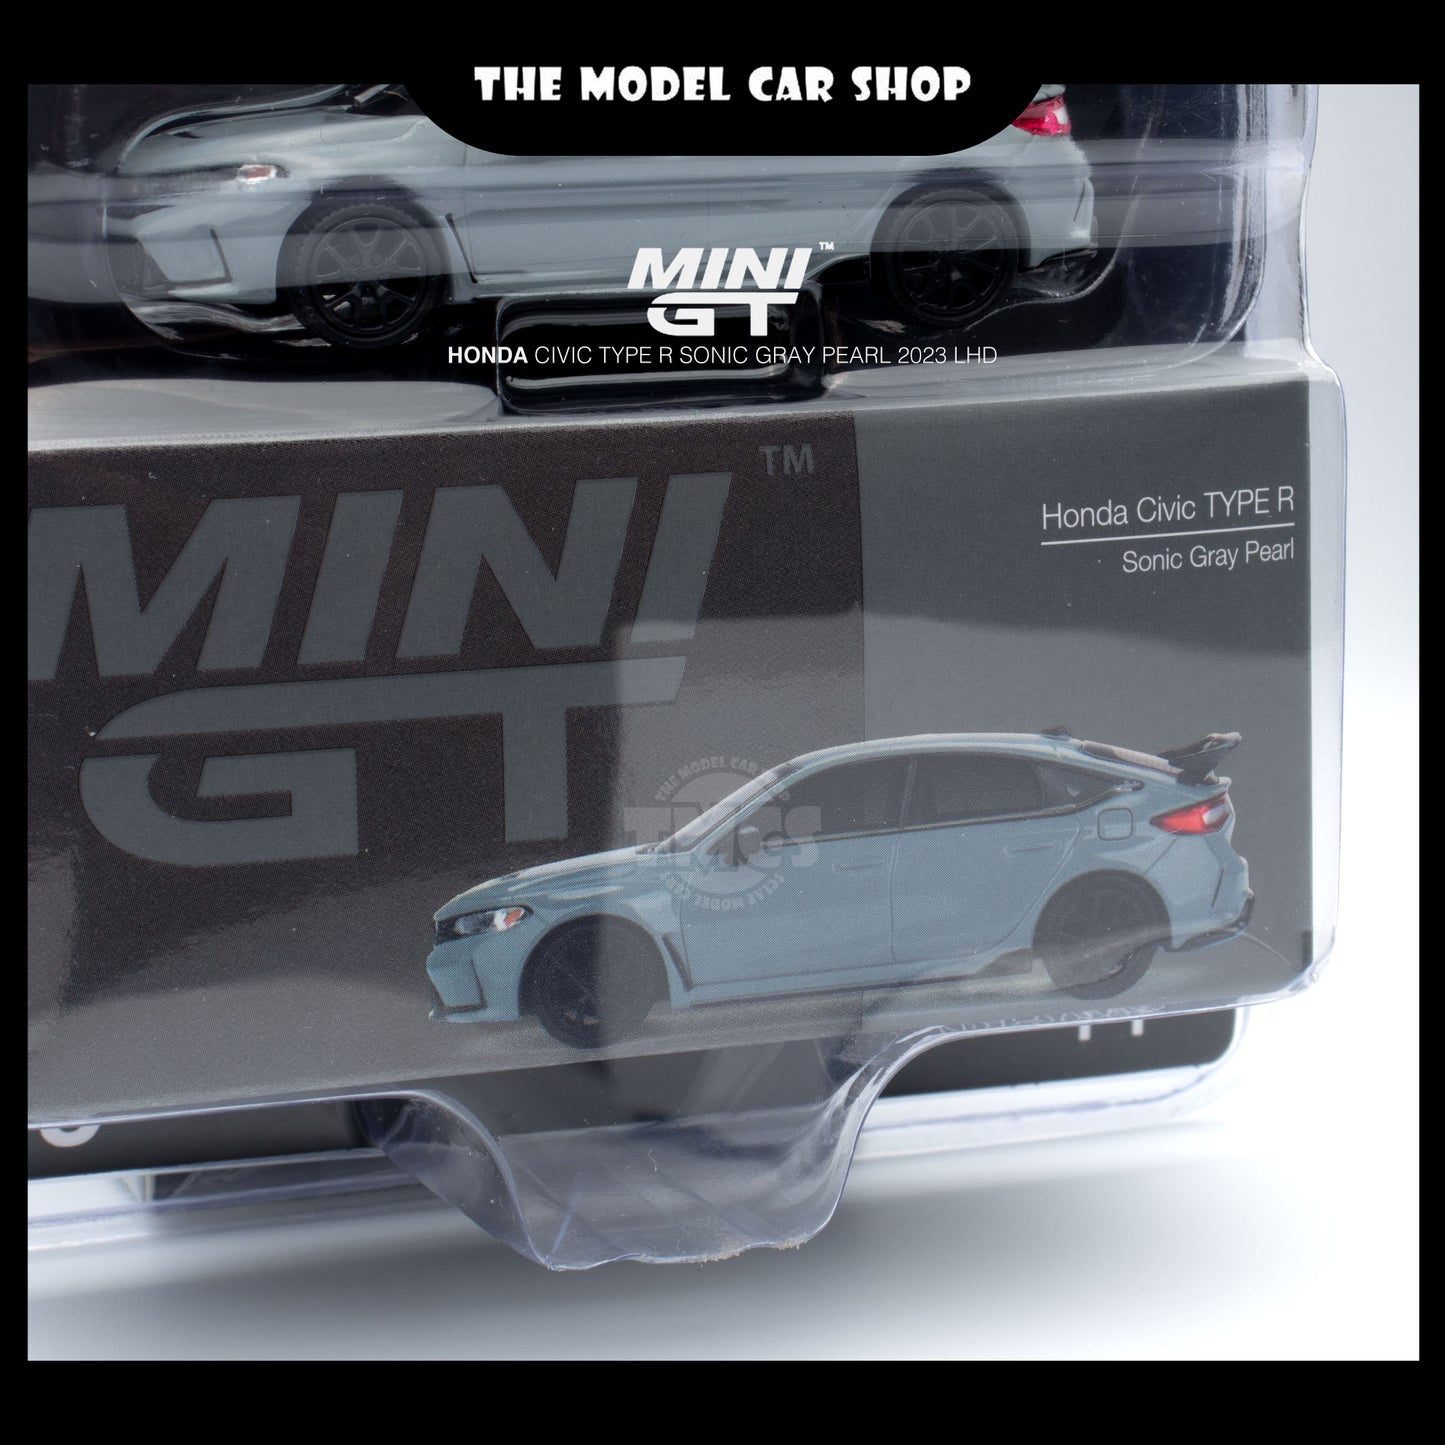 [MINI GT] Honda Civic Type R - Sonic Gray Pearl 2023 (Mijo Exclusive)